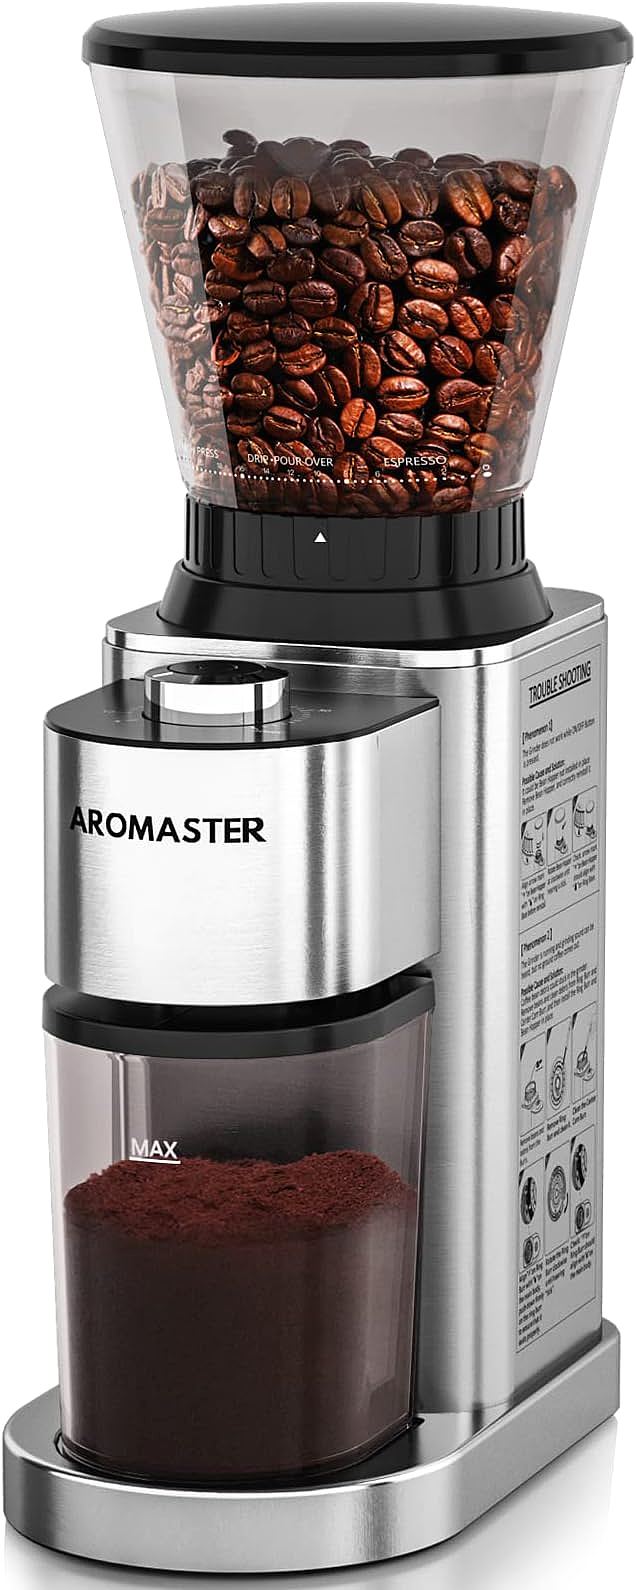 Aromaster CG204 Burr Coffee Grinder: Precise Grind Control to Preserve Original Flavor